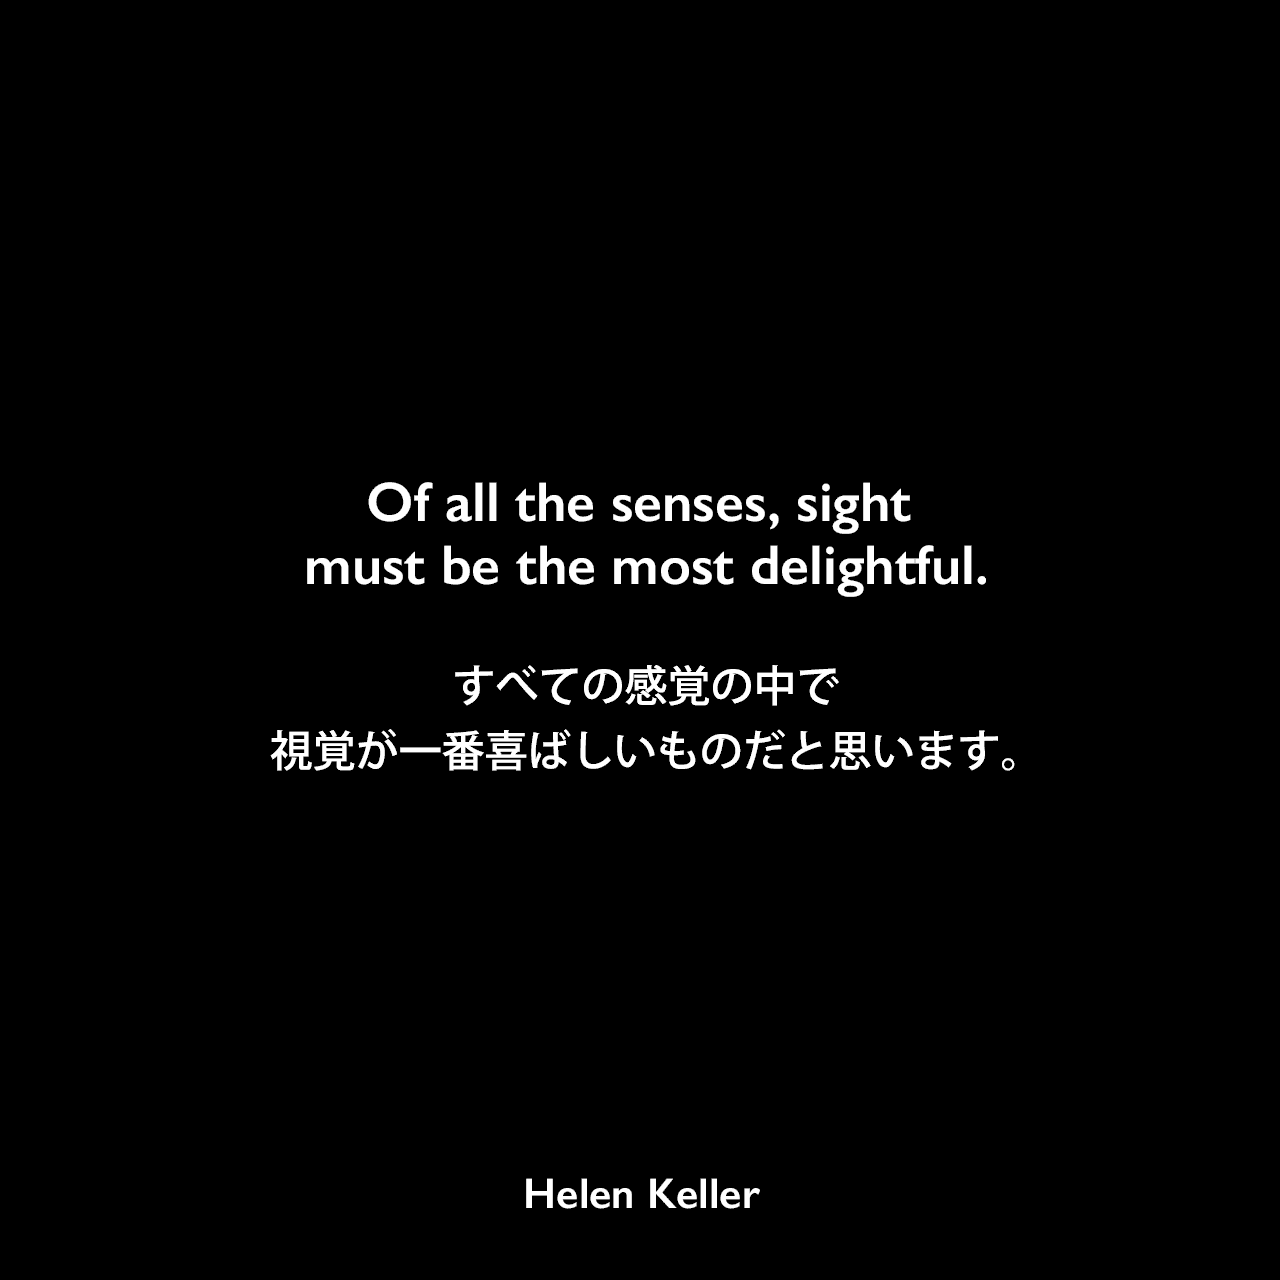 Of all the senses, sight must be the most delightful.すべての感覚の中で視覚が一番喜ばしいものだと思います。Helen Keller